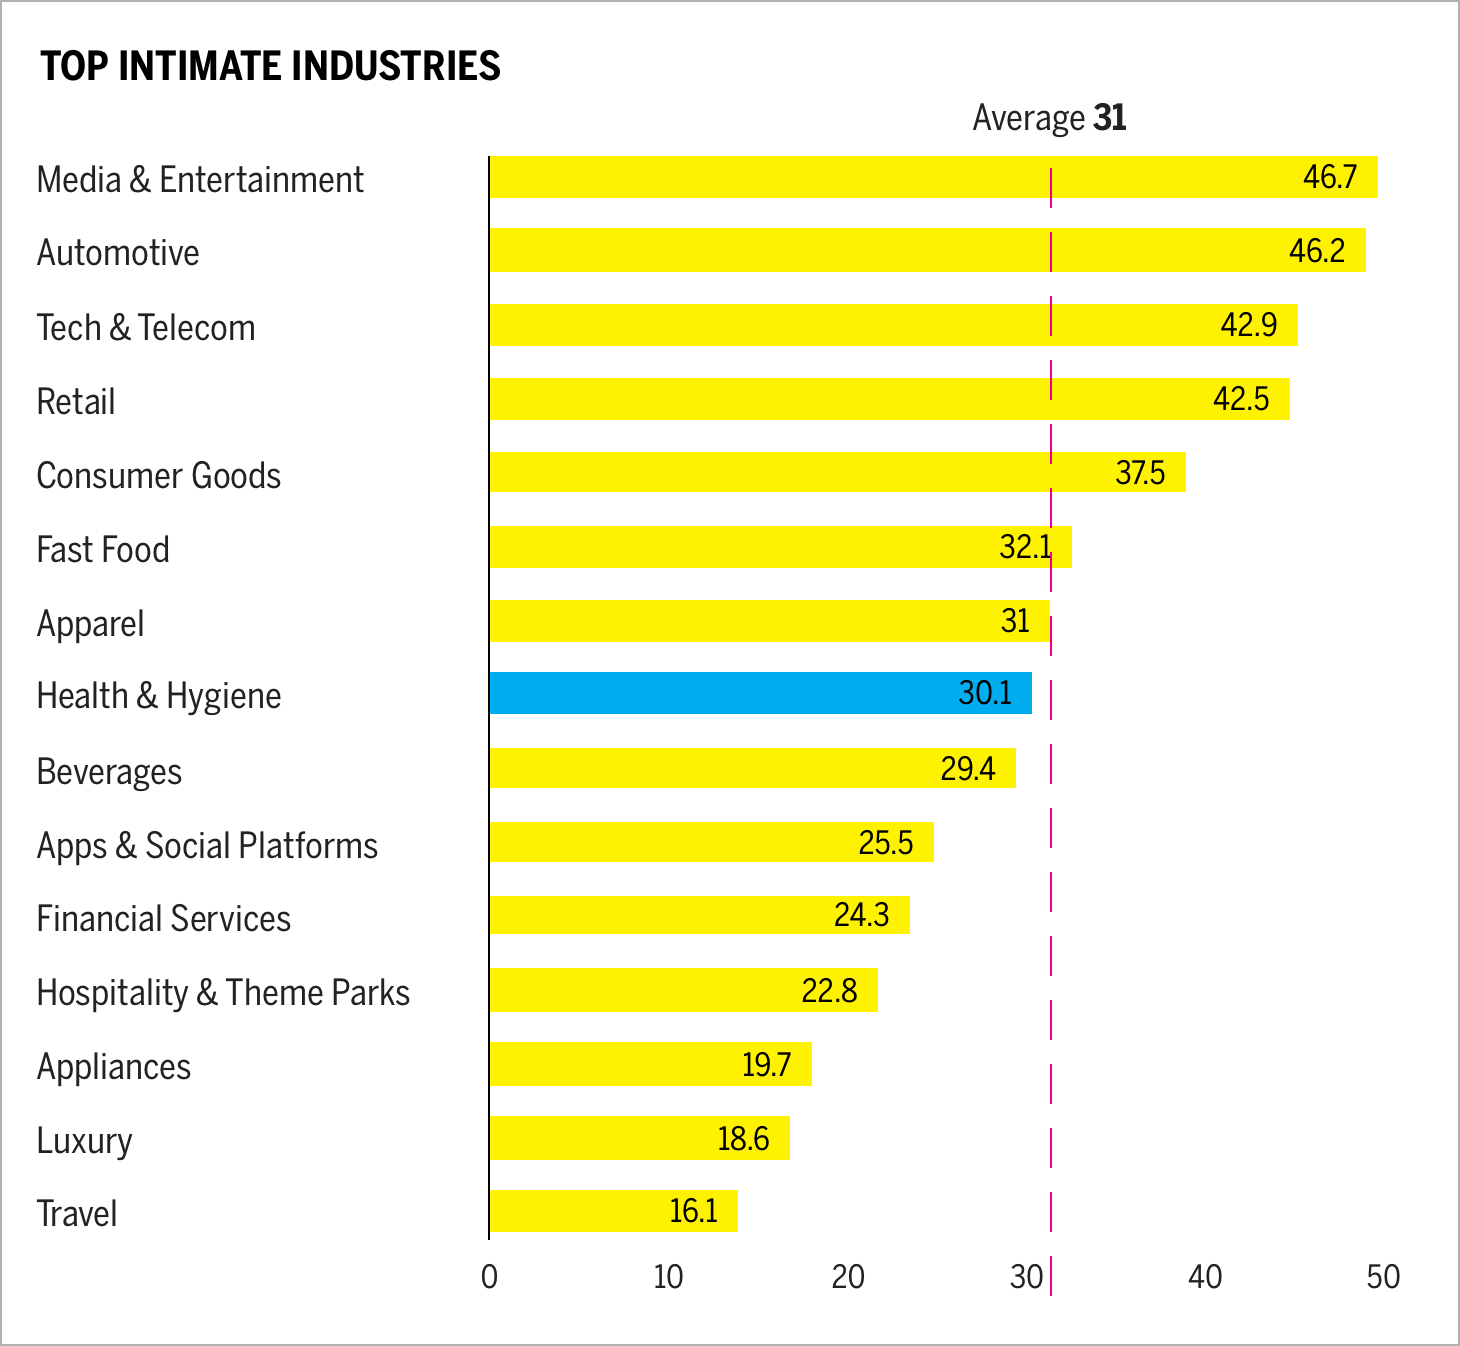 Top 15 intimate industries